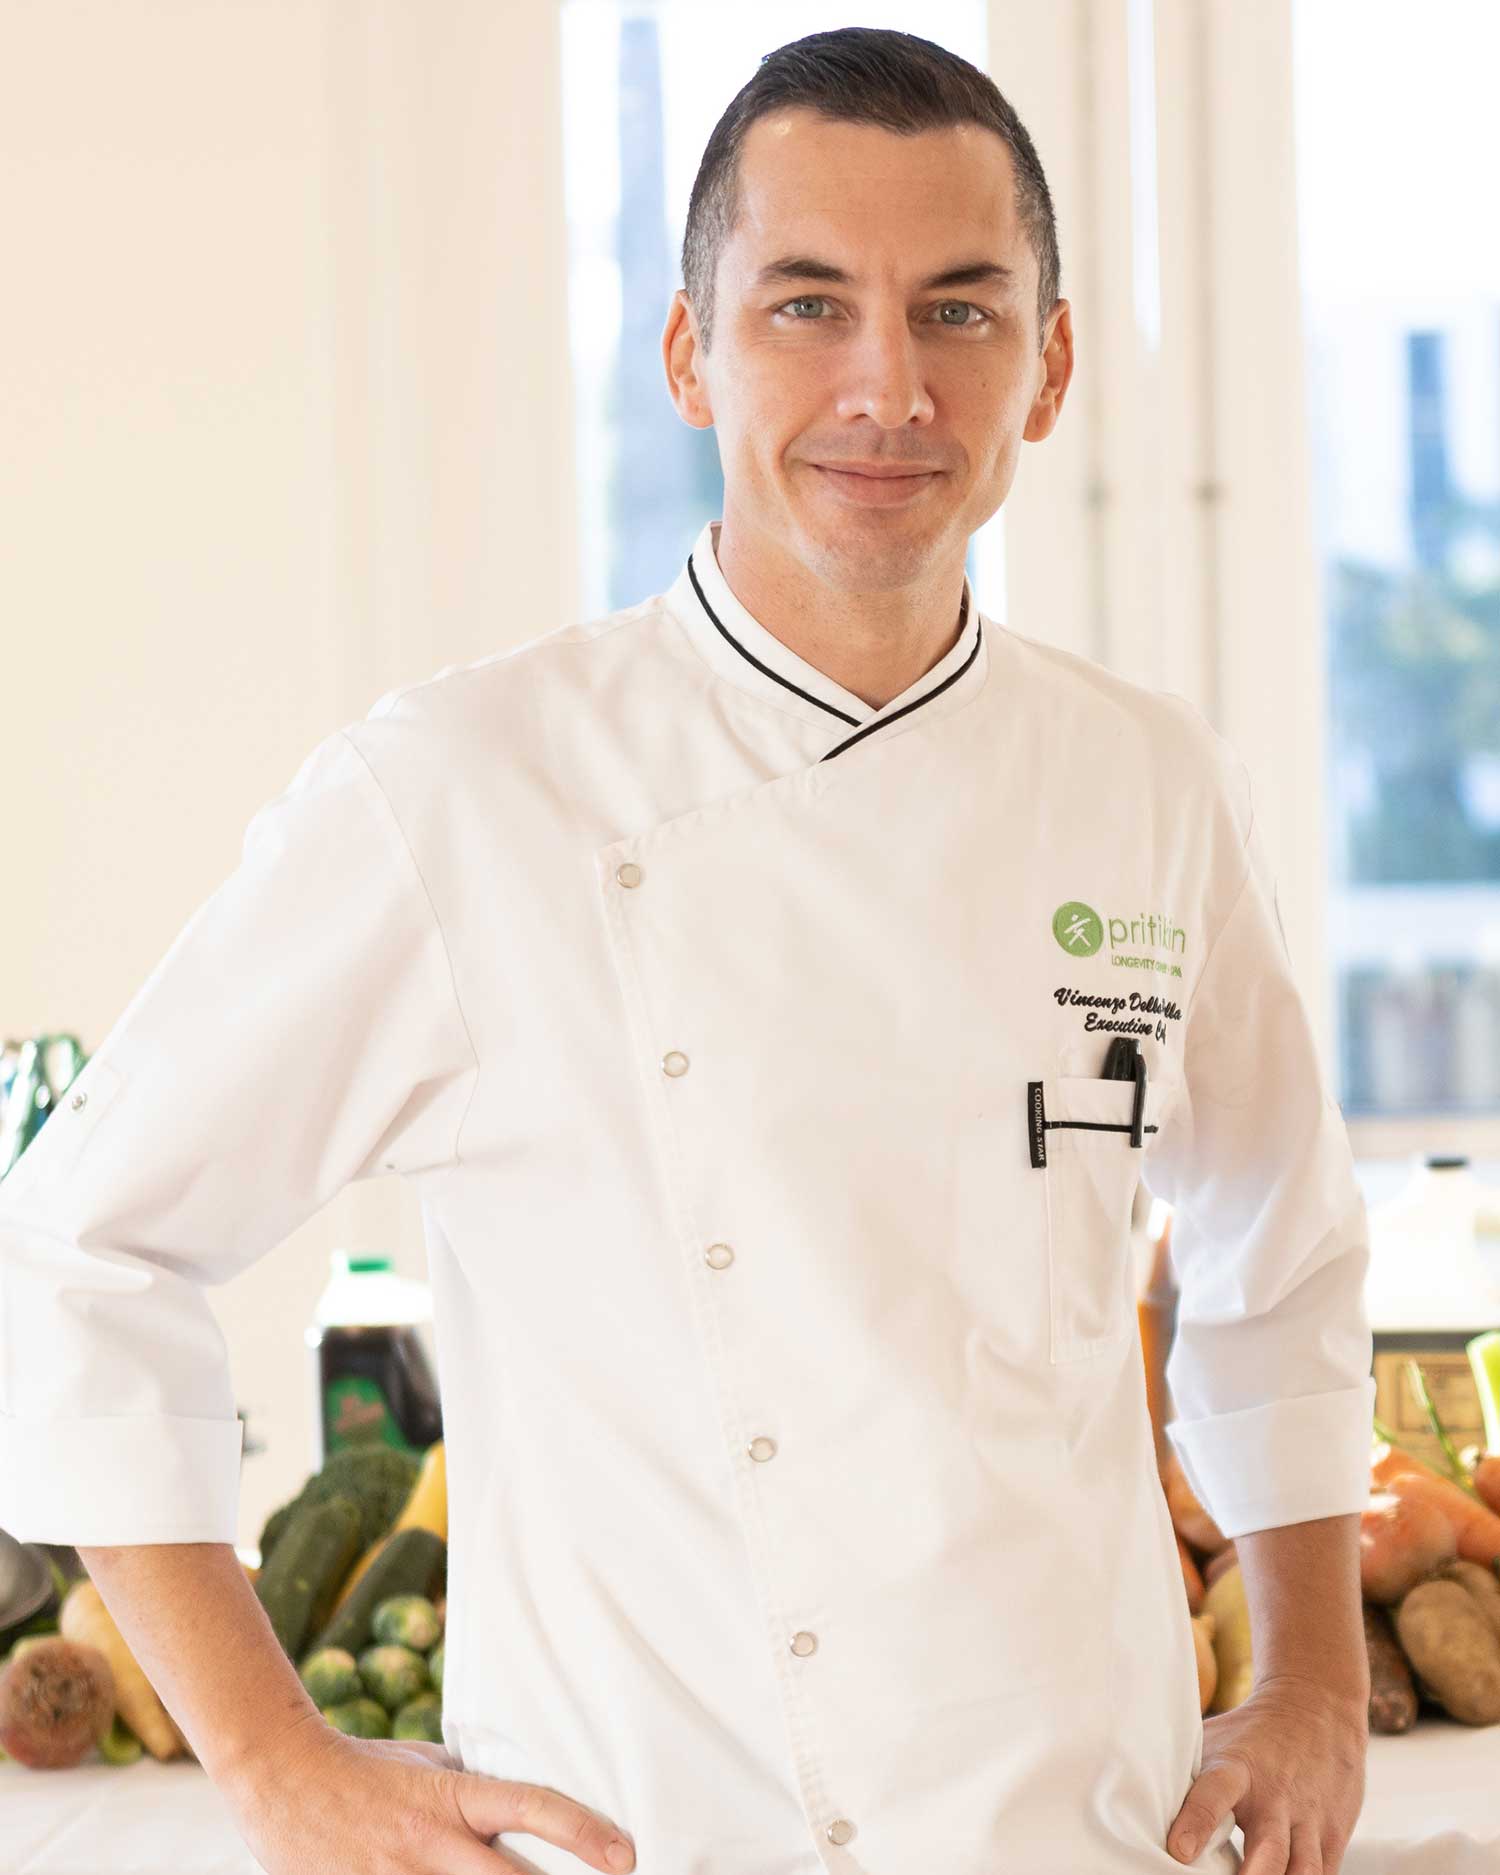 Vincenzo Della Polla | Executive Chef & Cooking School Instructor at the Pritikin Wellness Retreat